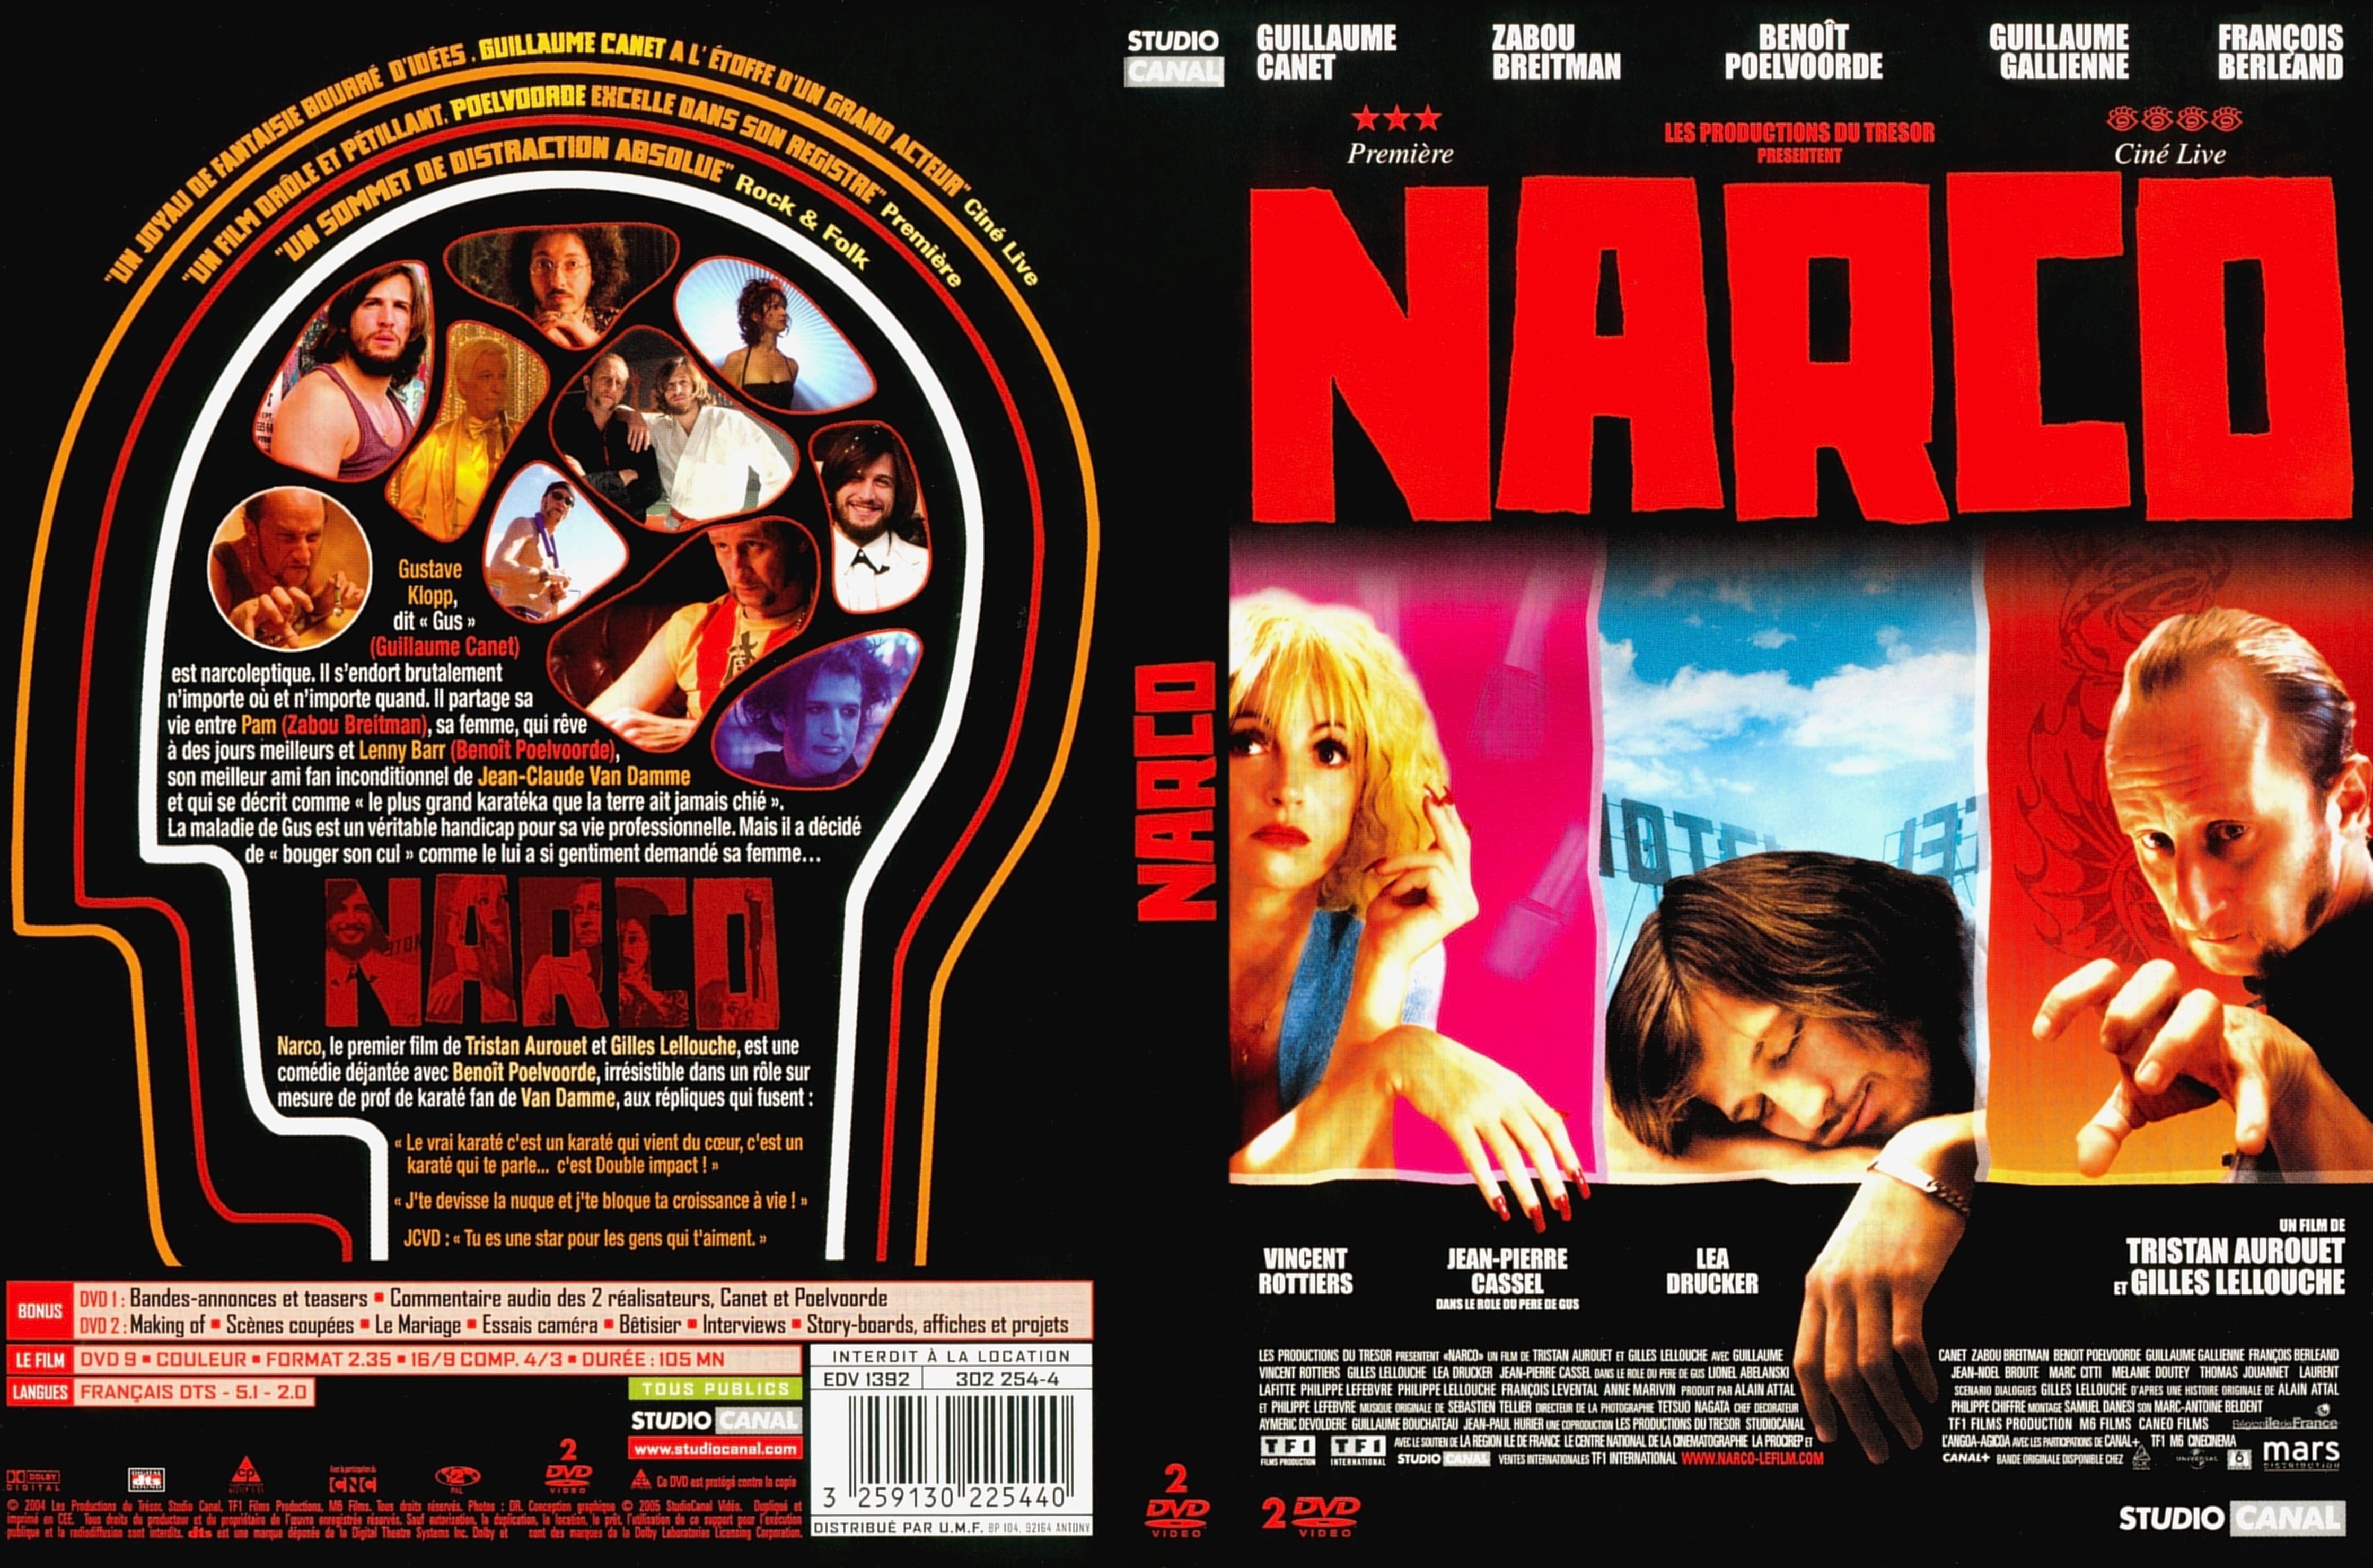 Jaquette DVD Narco v2